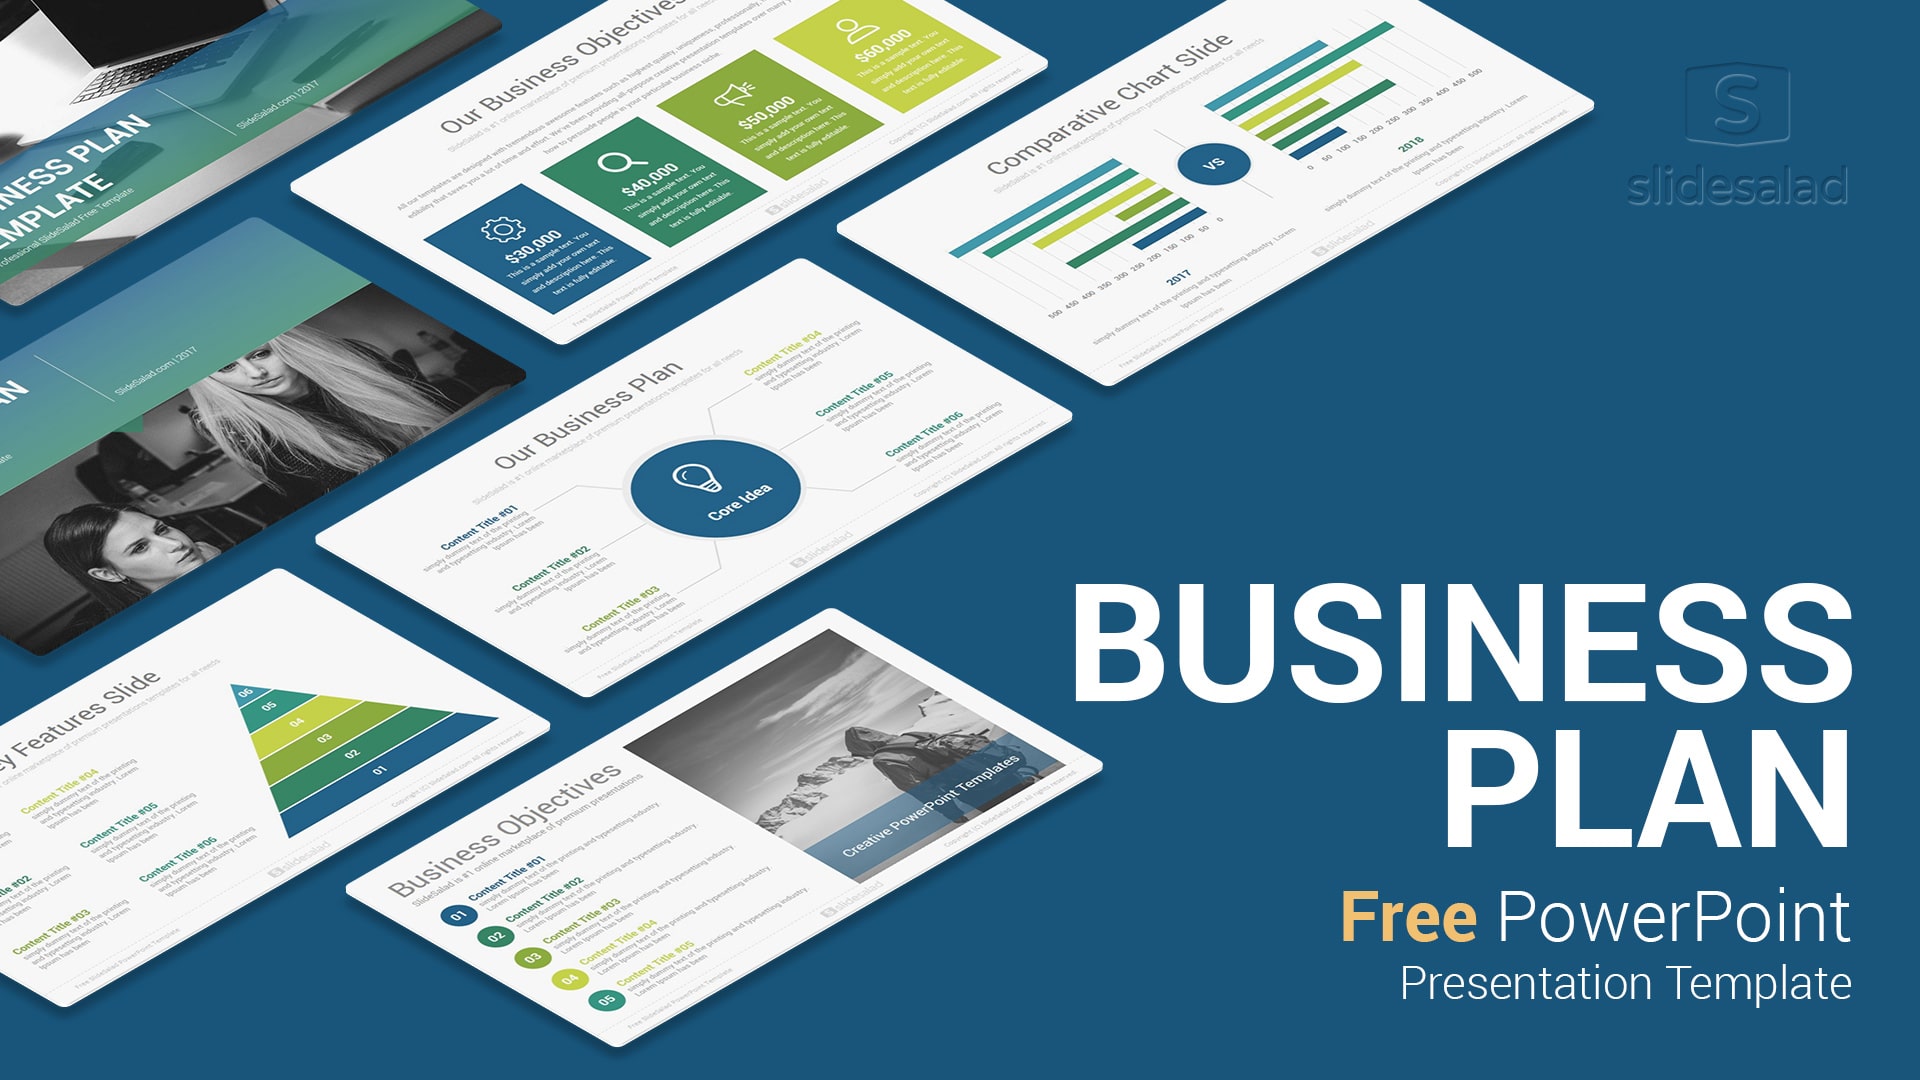 Business Plan Free PowerPoint Presentation Template - SlideSalad Regarding Powerpoint Sample Templates Free Download